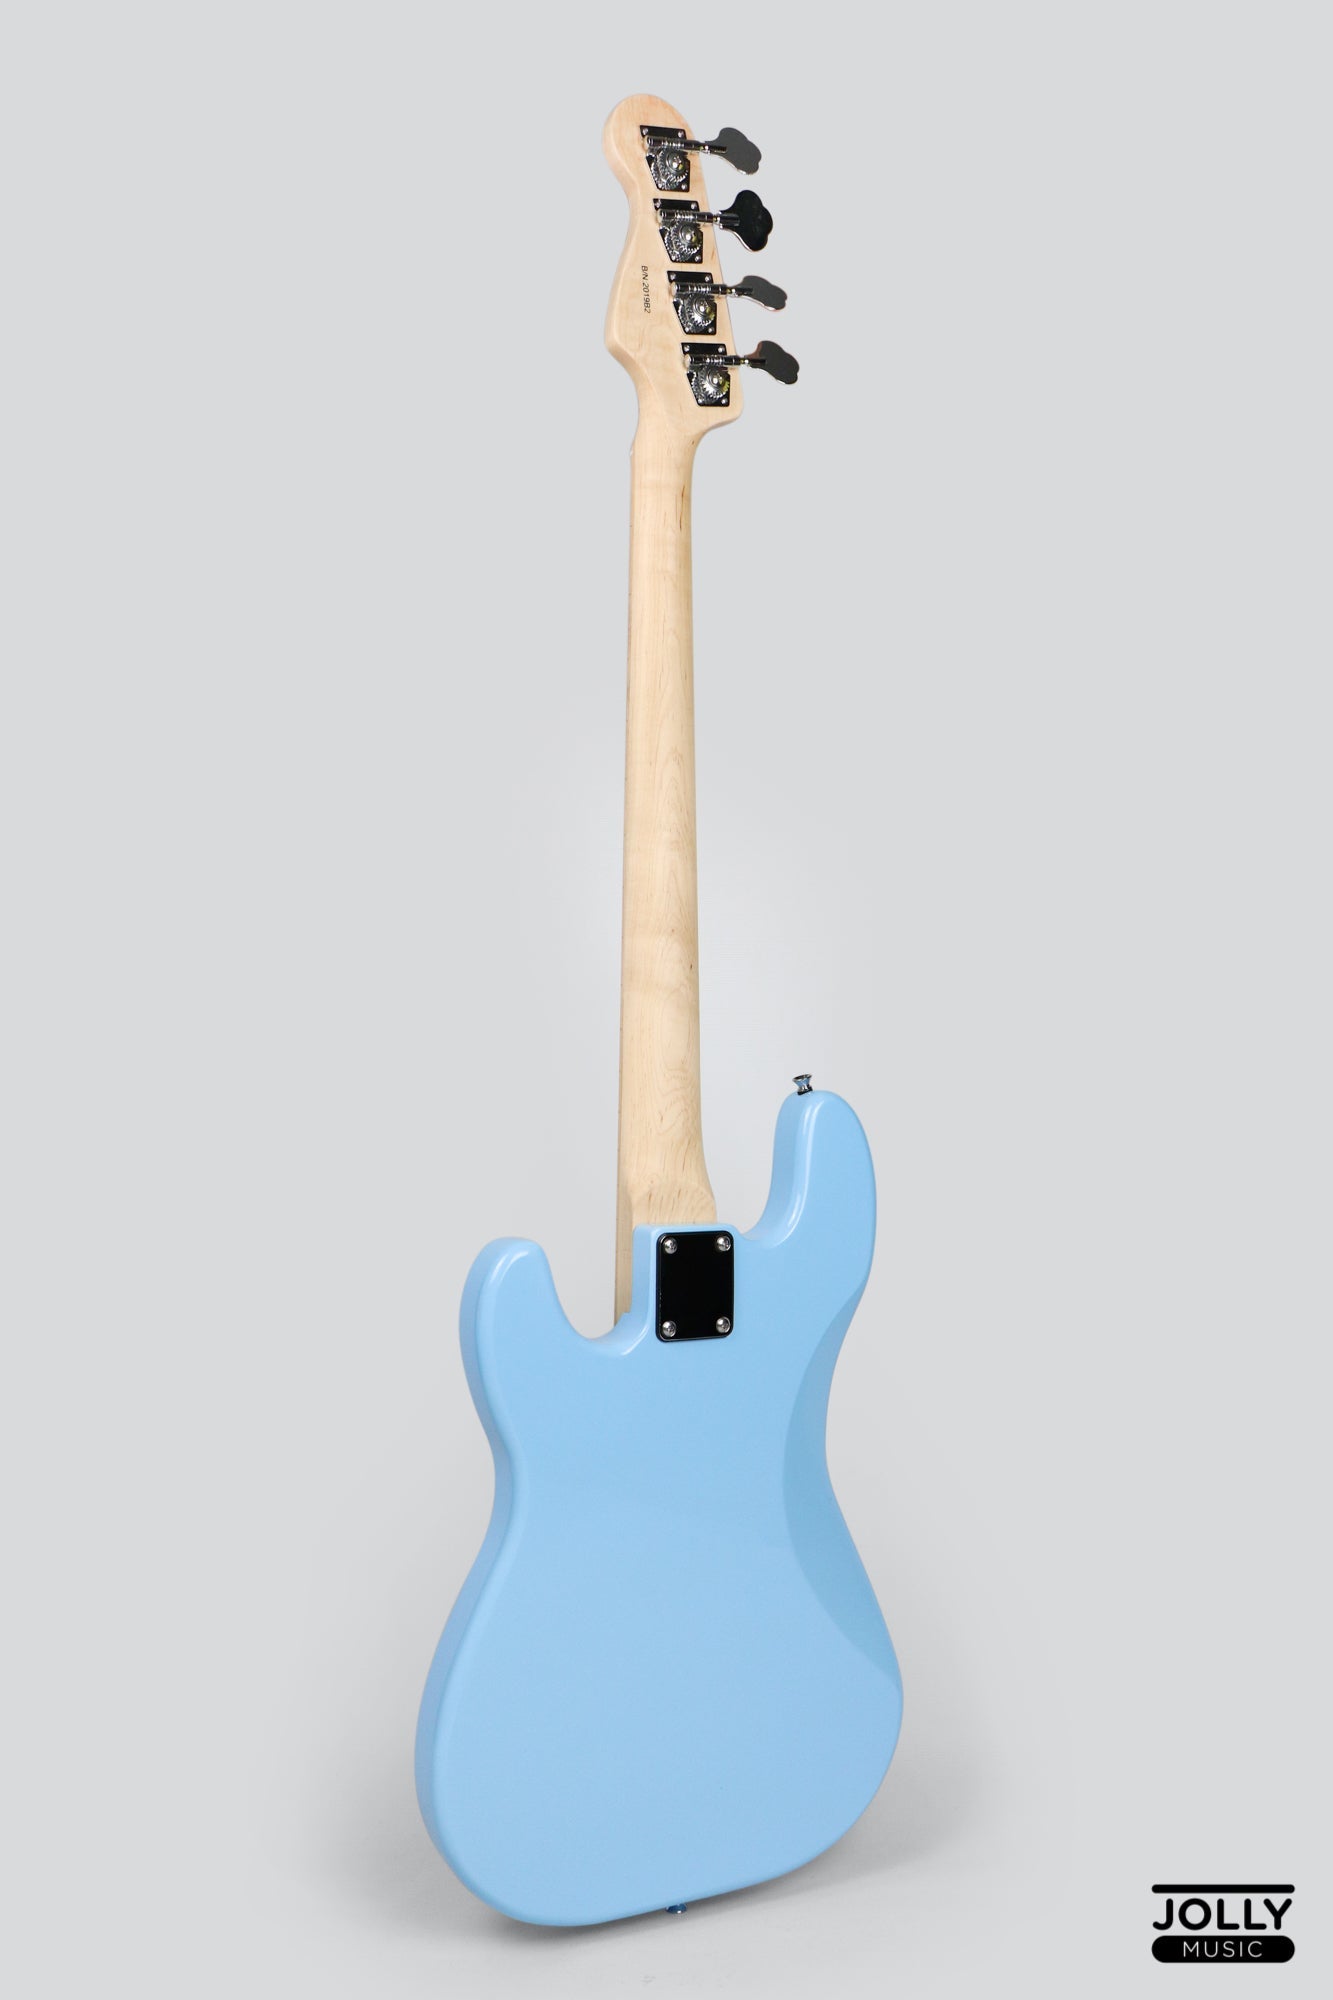 JCraft PB-1 4-String Electric Bass Guitar with Gigbag - Powder Blue